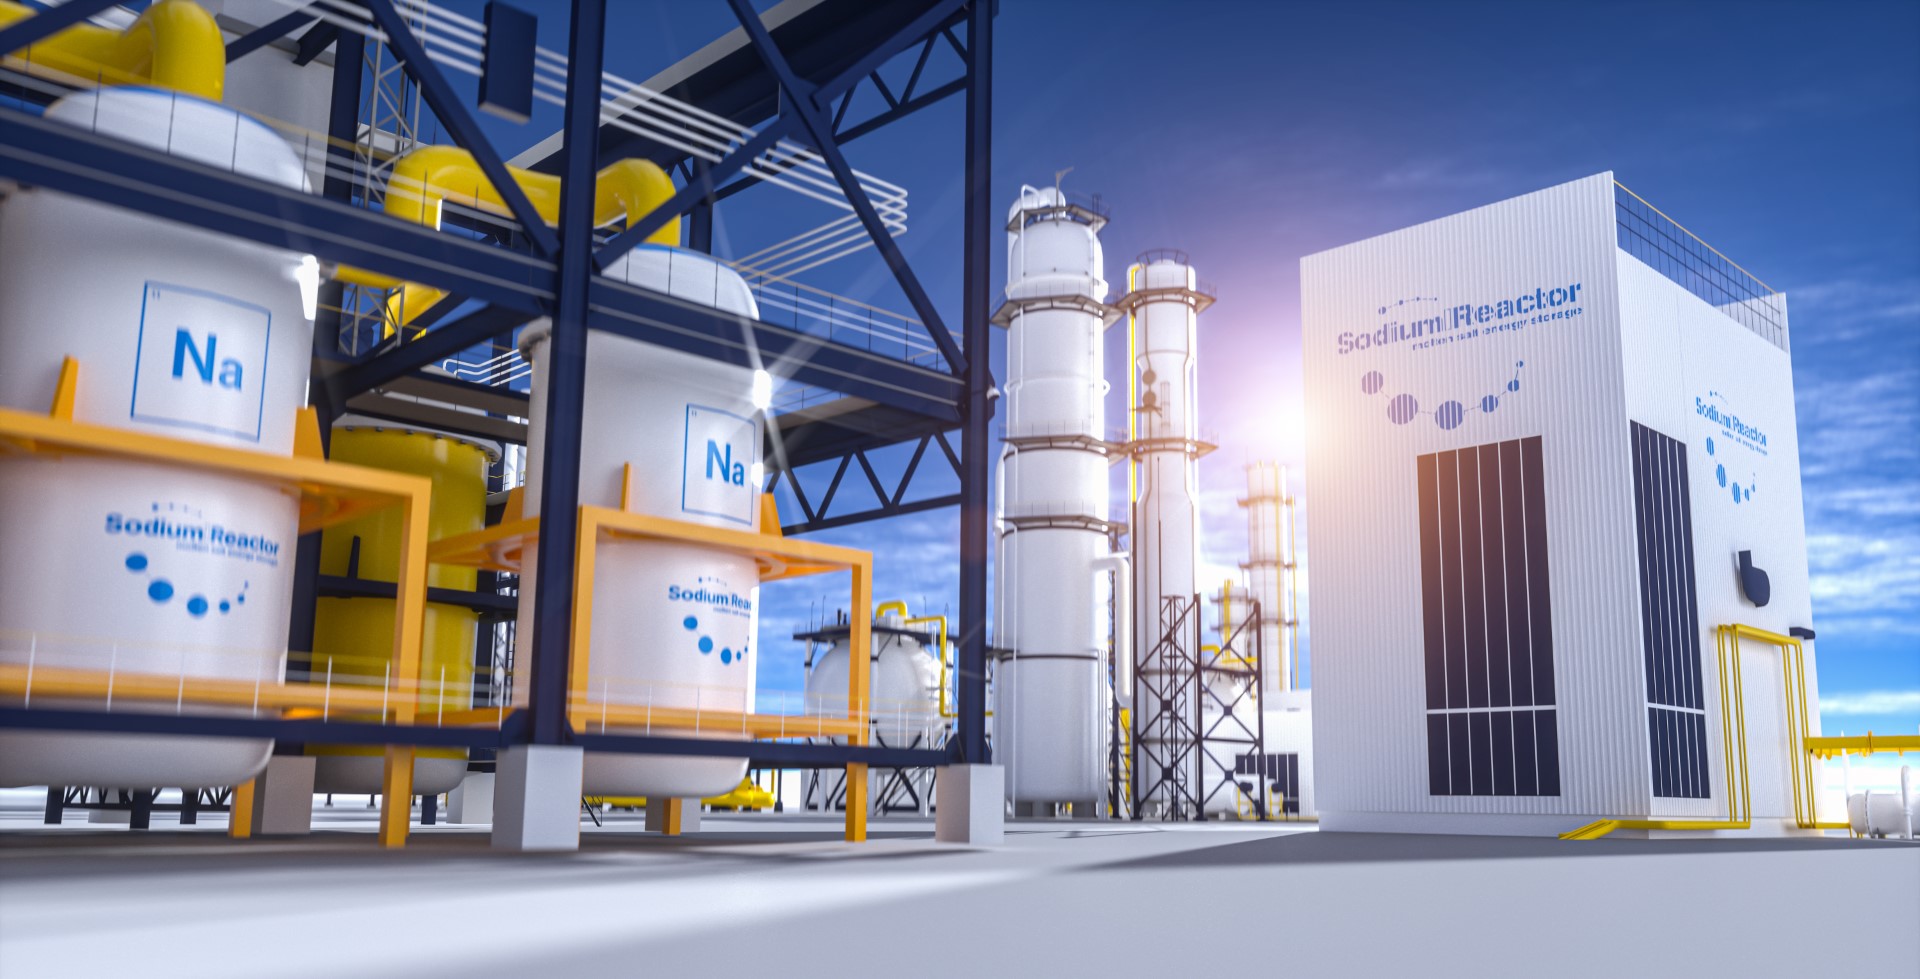 salt energy storage natrium sodium nuclear reactor power plant on a sunny day. Molden Salt energy storage is a future energy concept.